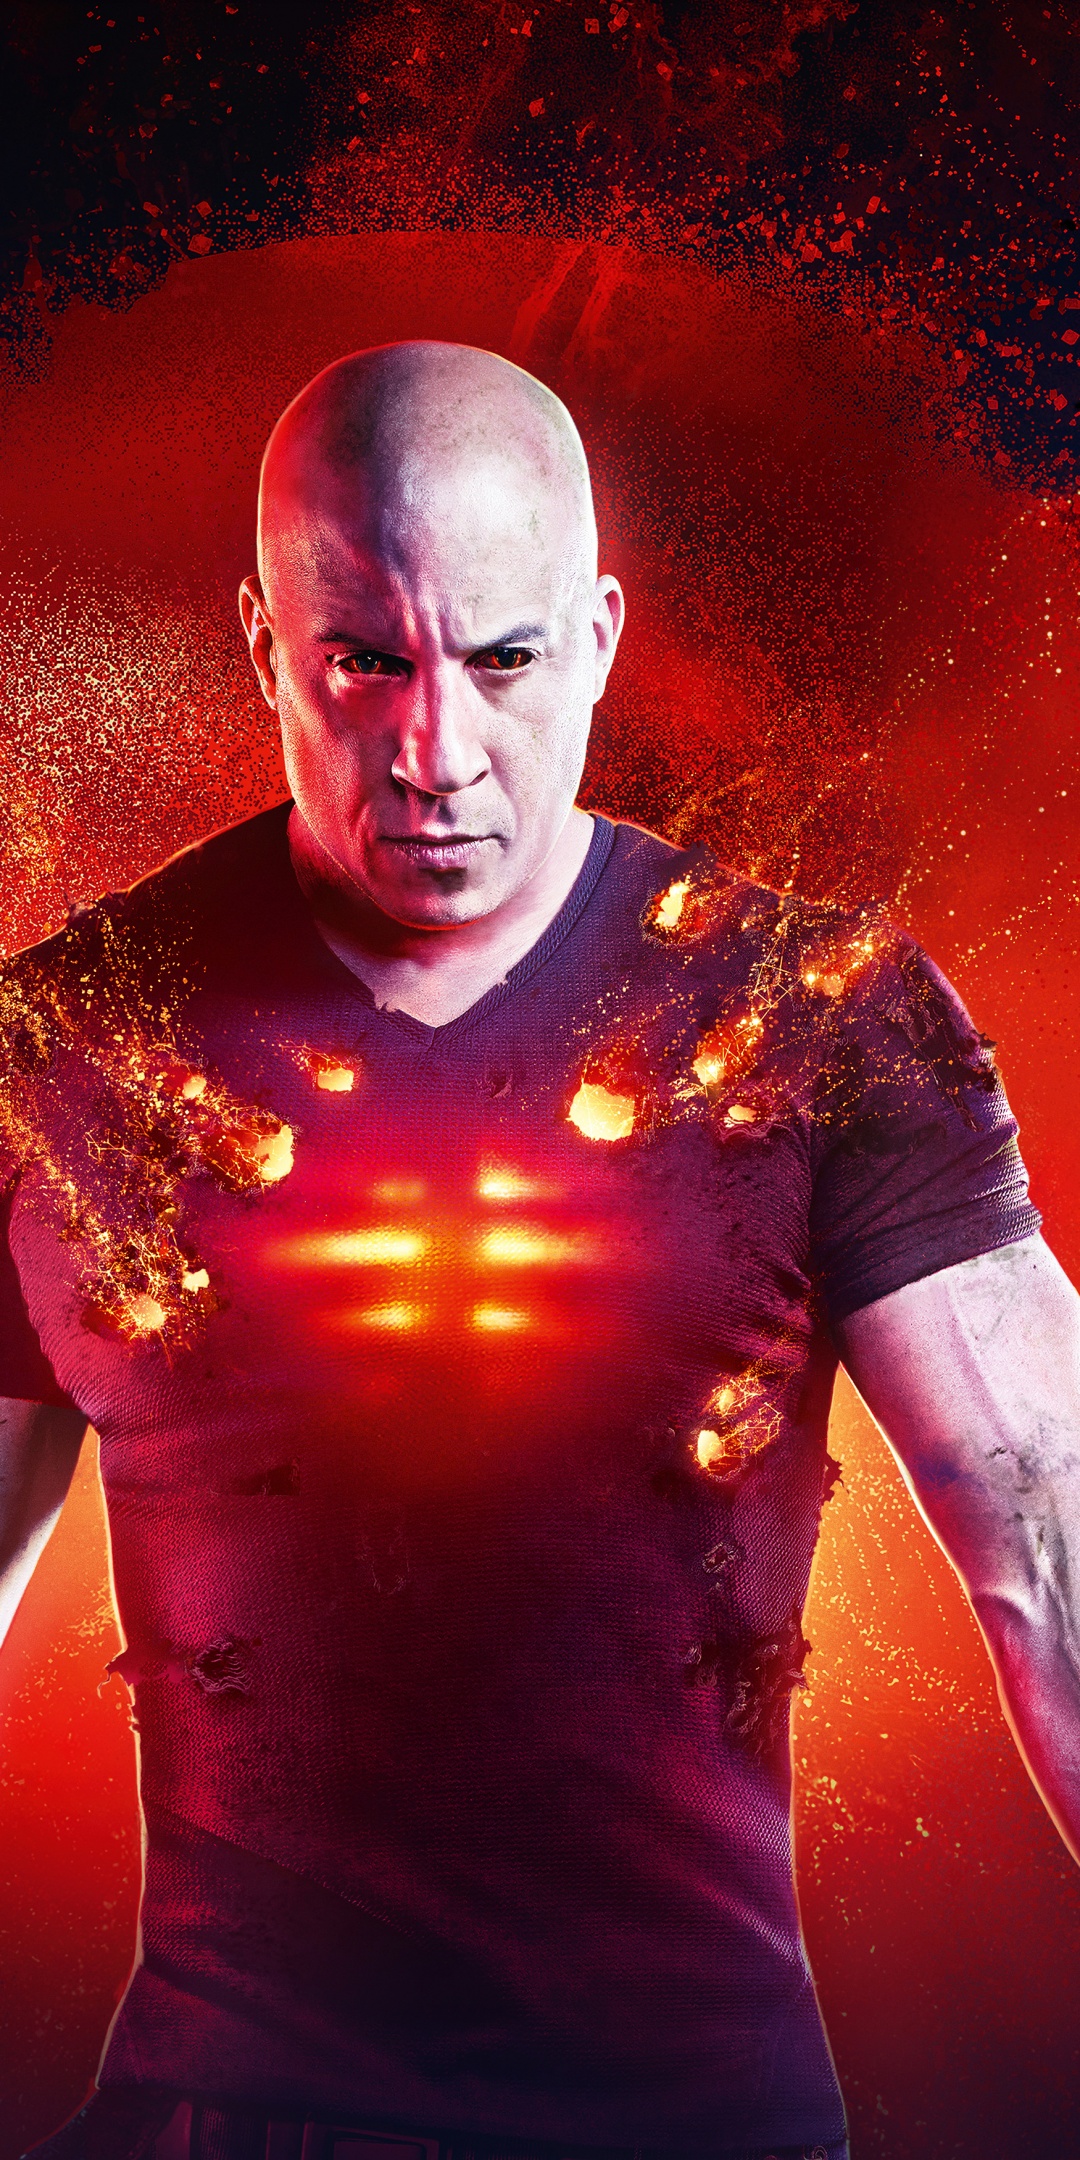 Bloodshot 4K Wallpaper, Vin Diesel, Action movies, 2020 Movies, 5K, 8K